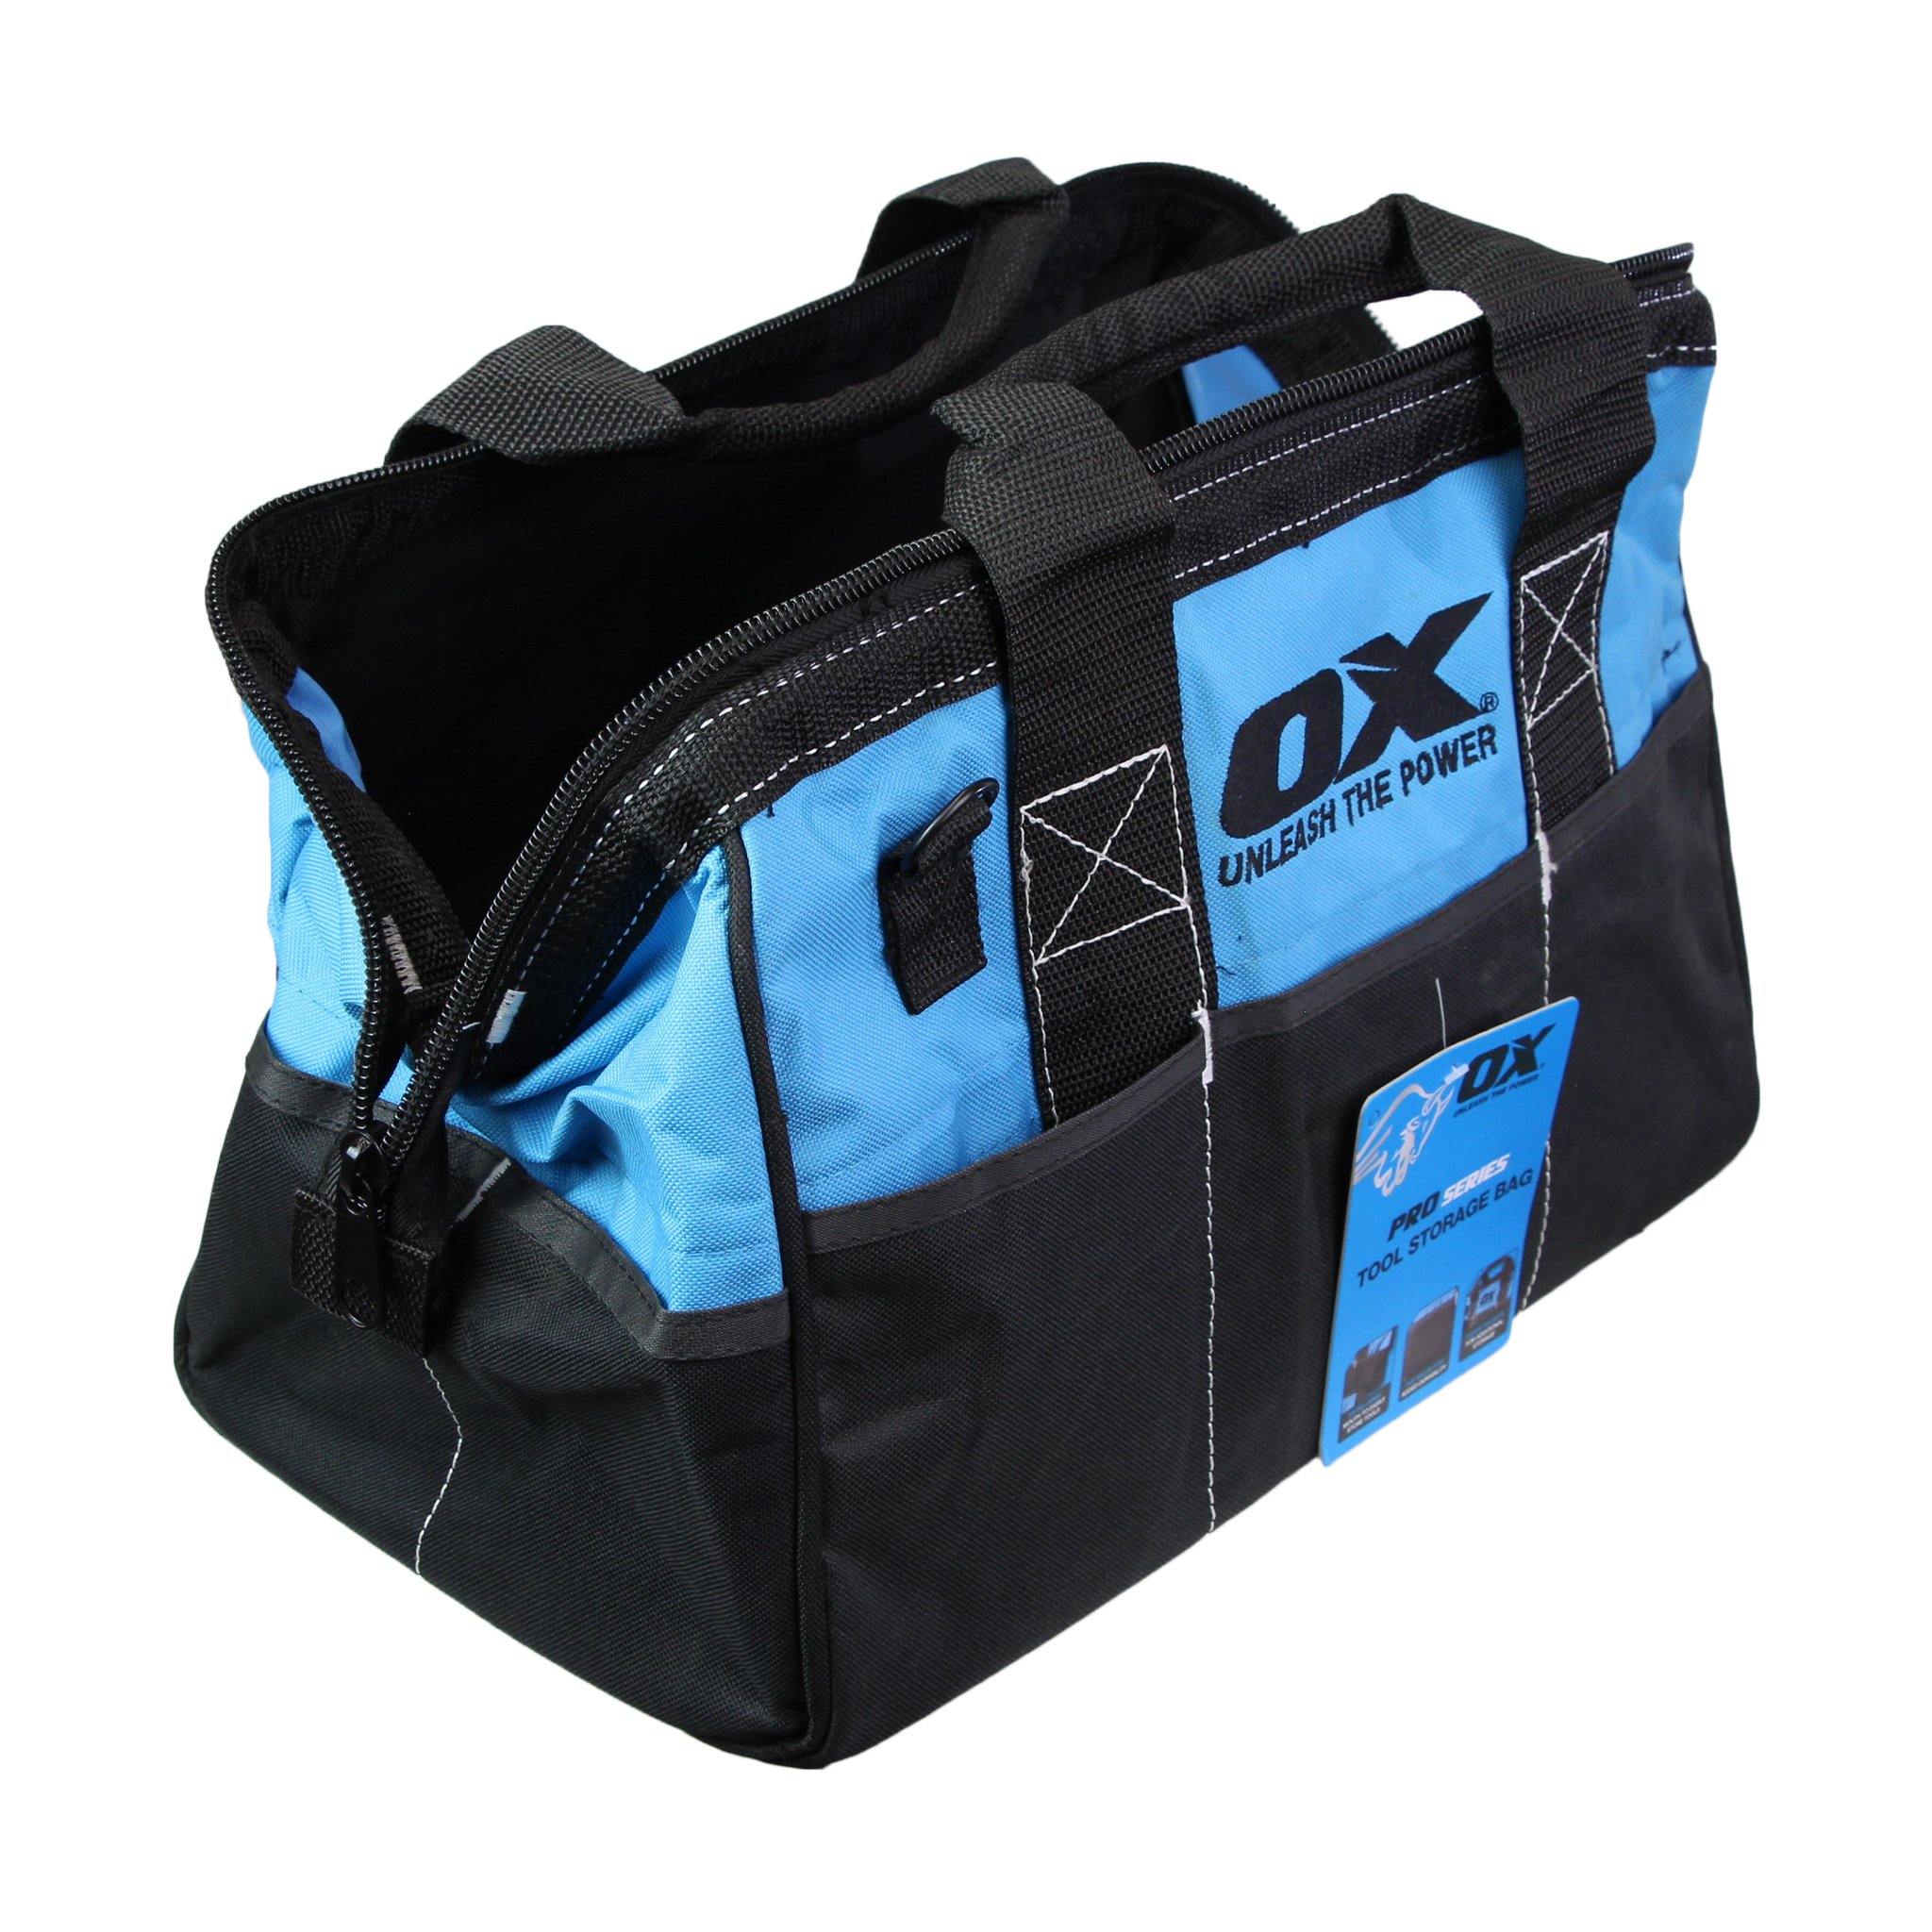 Ox Pro 15" Tool Storage Bag - Technique Tools